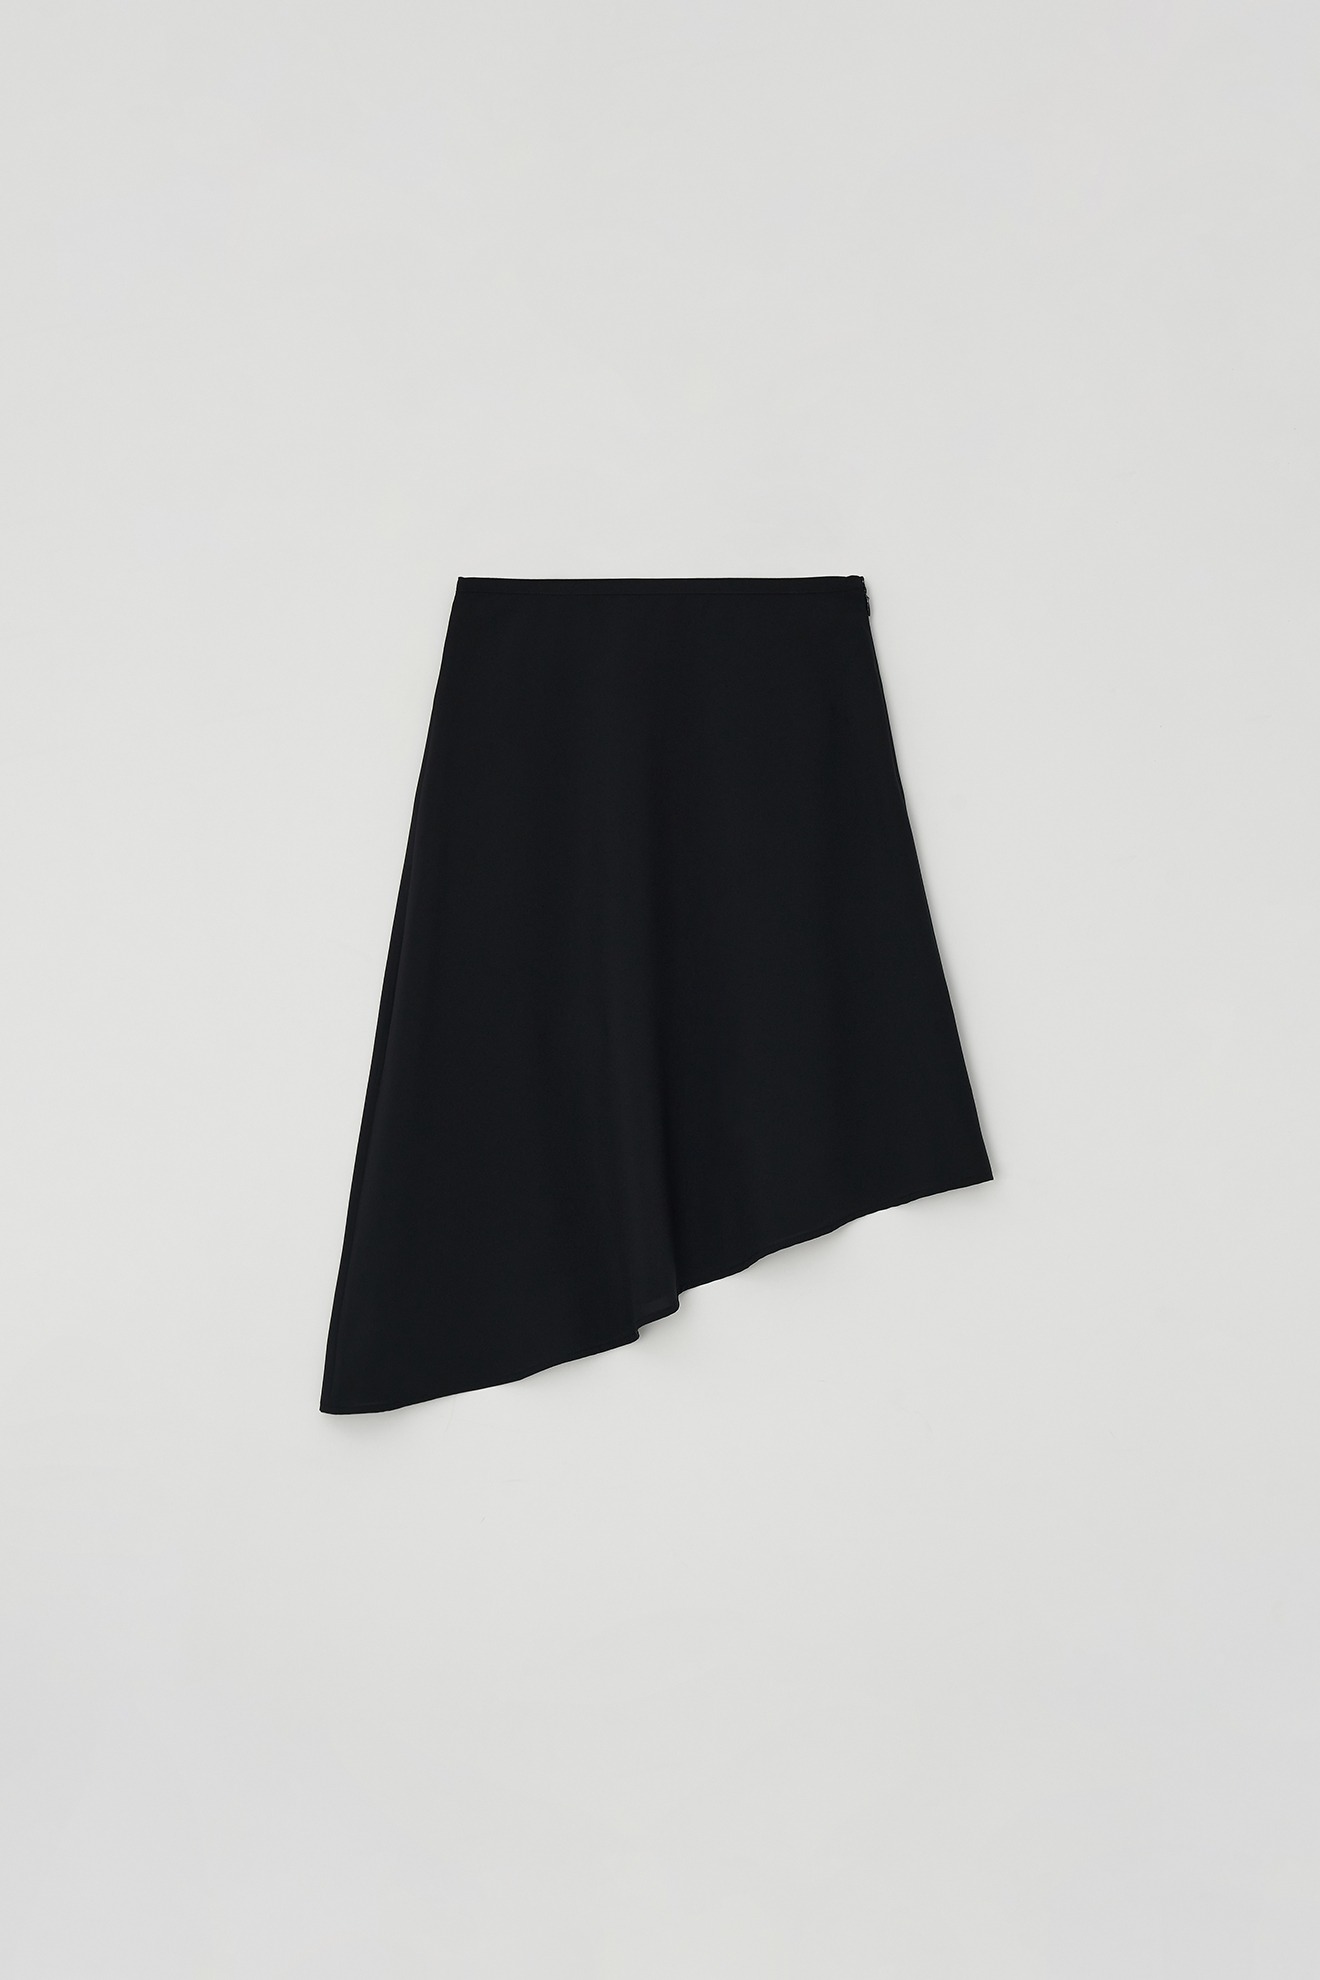 Unbalanced Skirt (black)